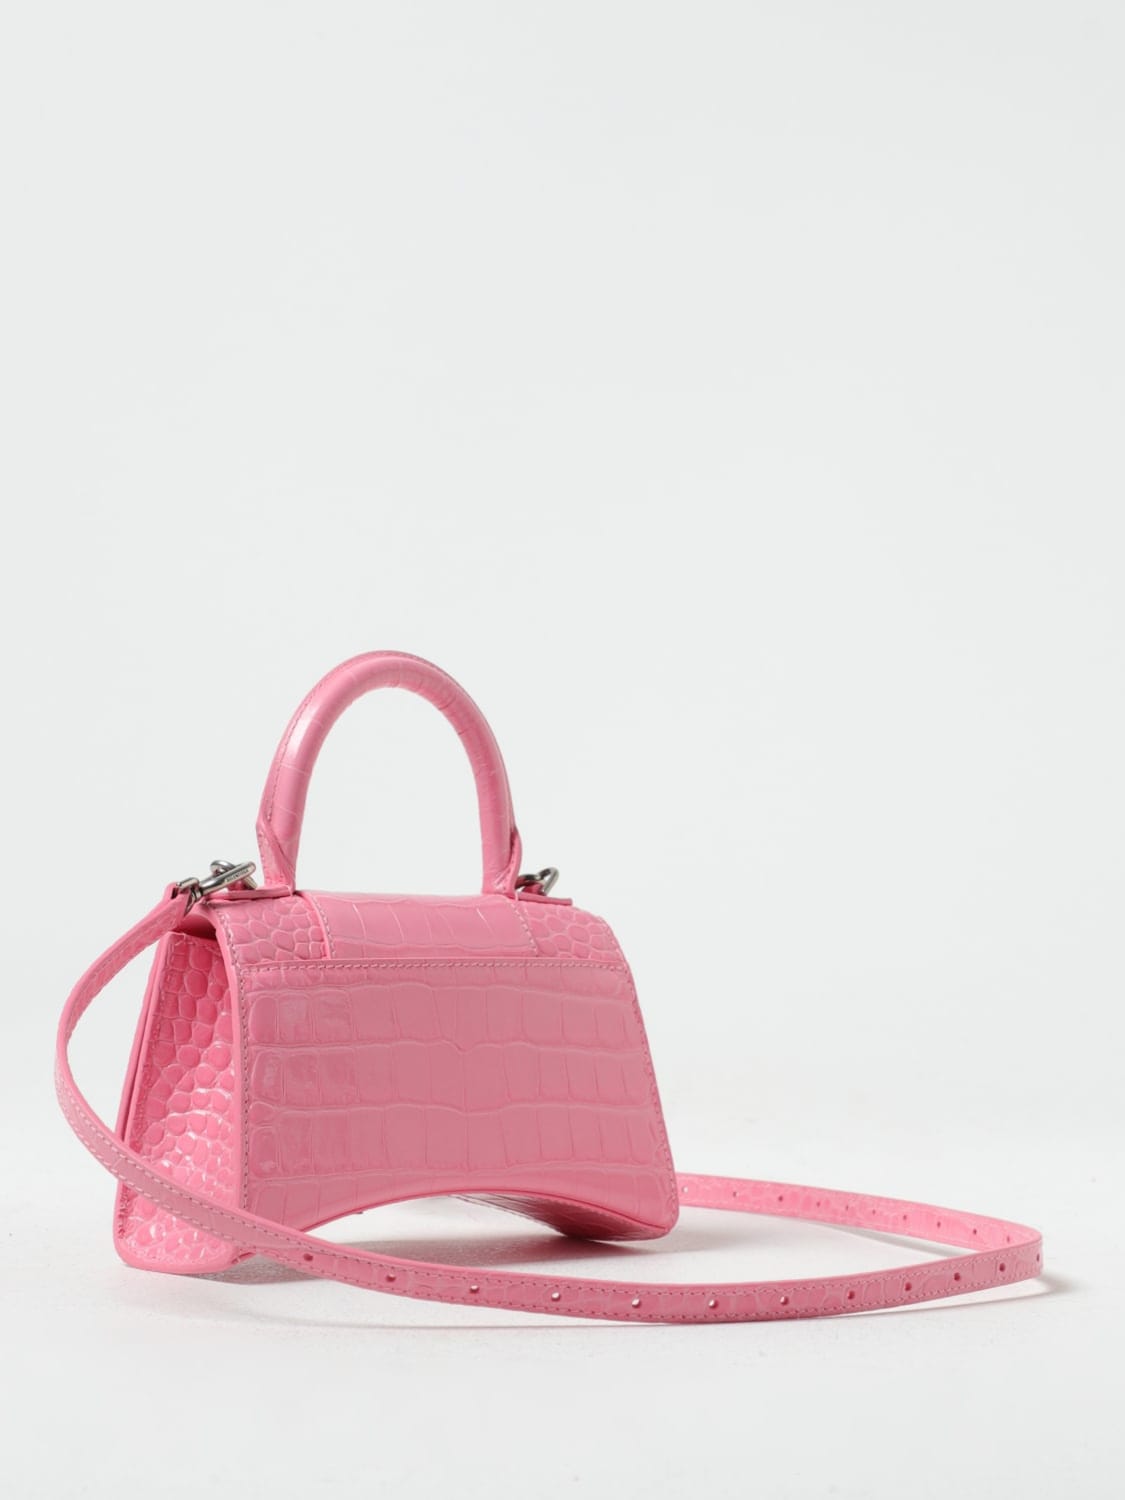 BALENCIAGA: Shoulder bag woman - Pink